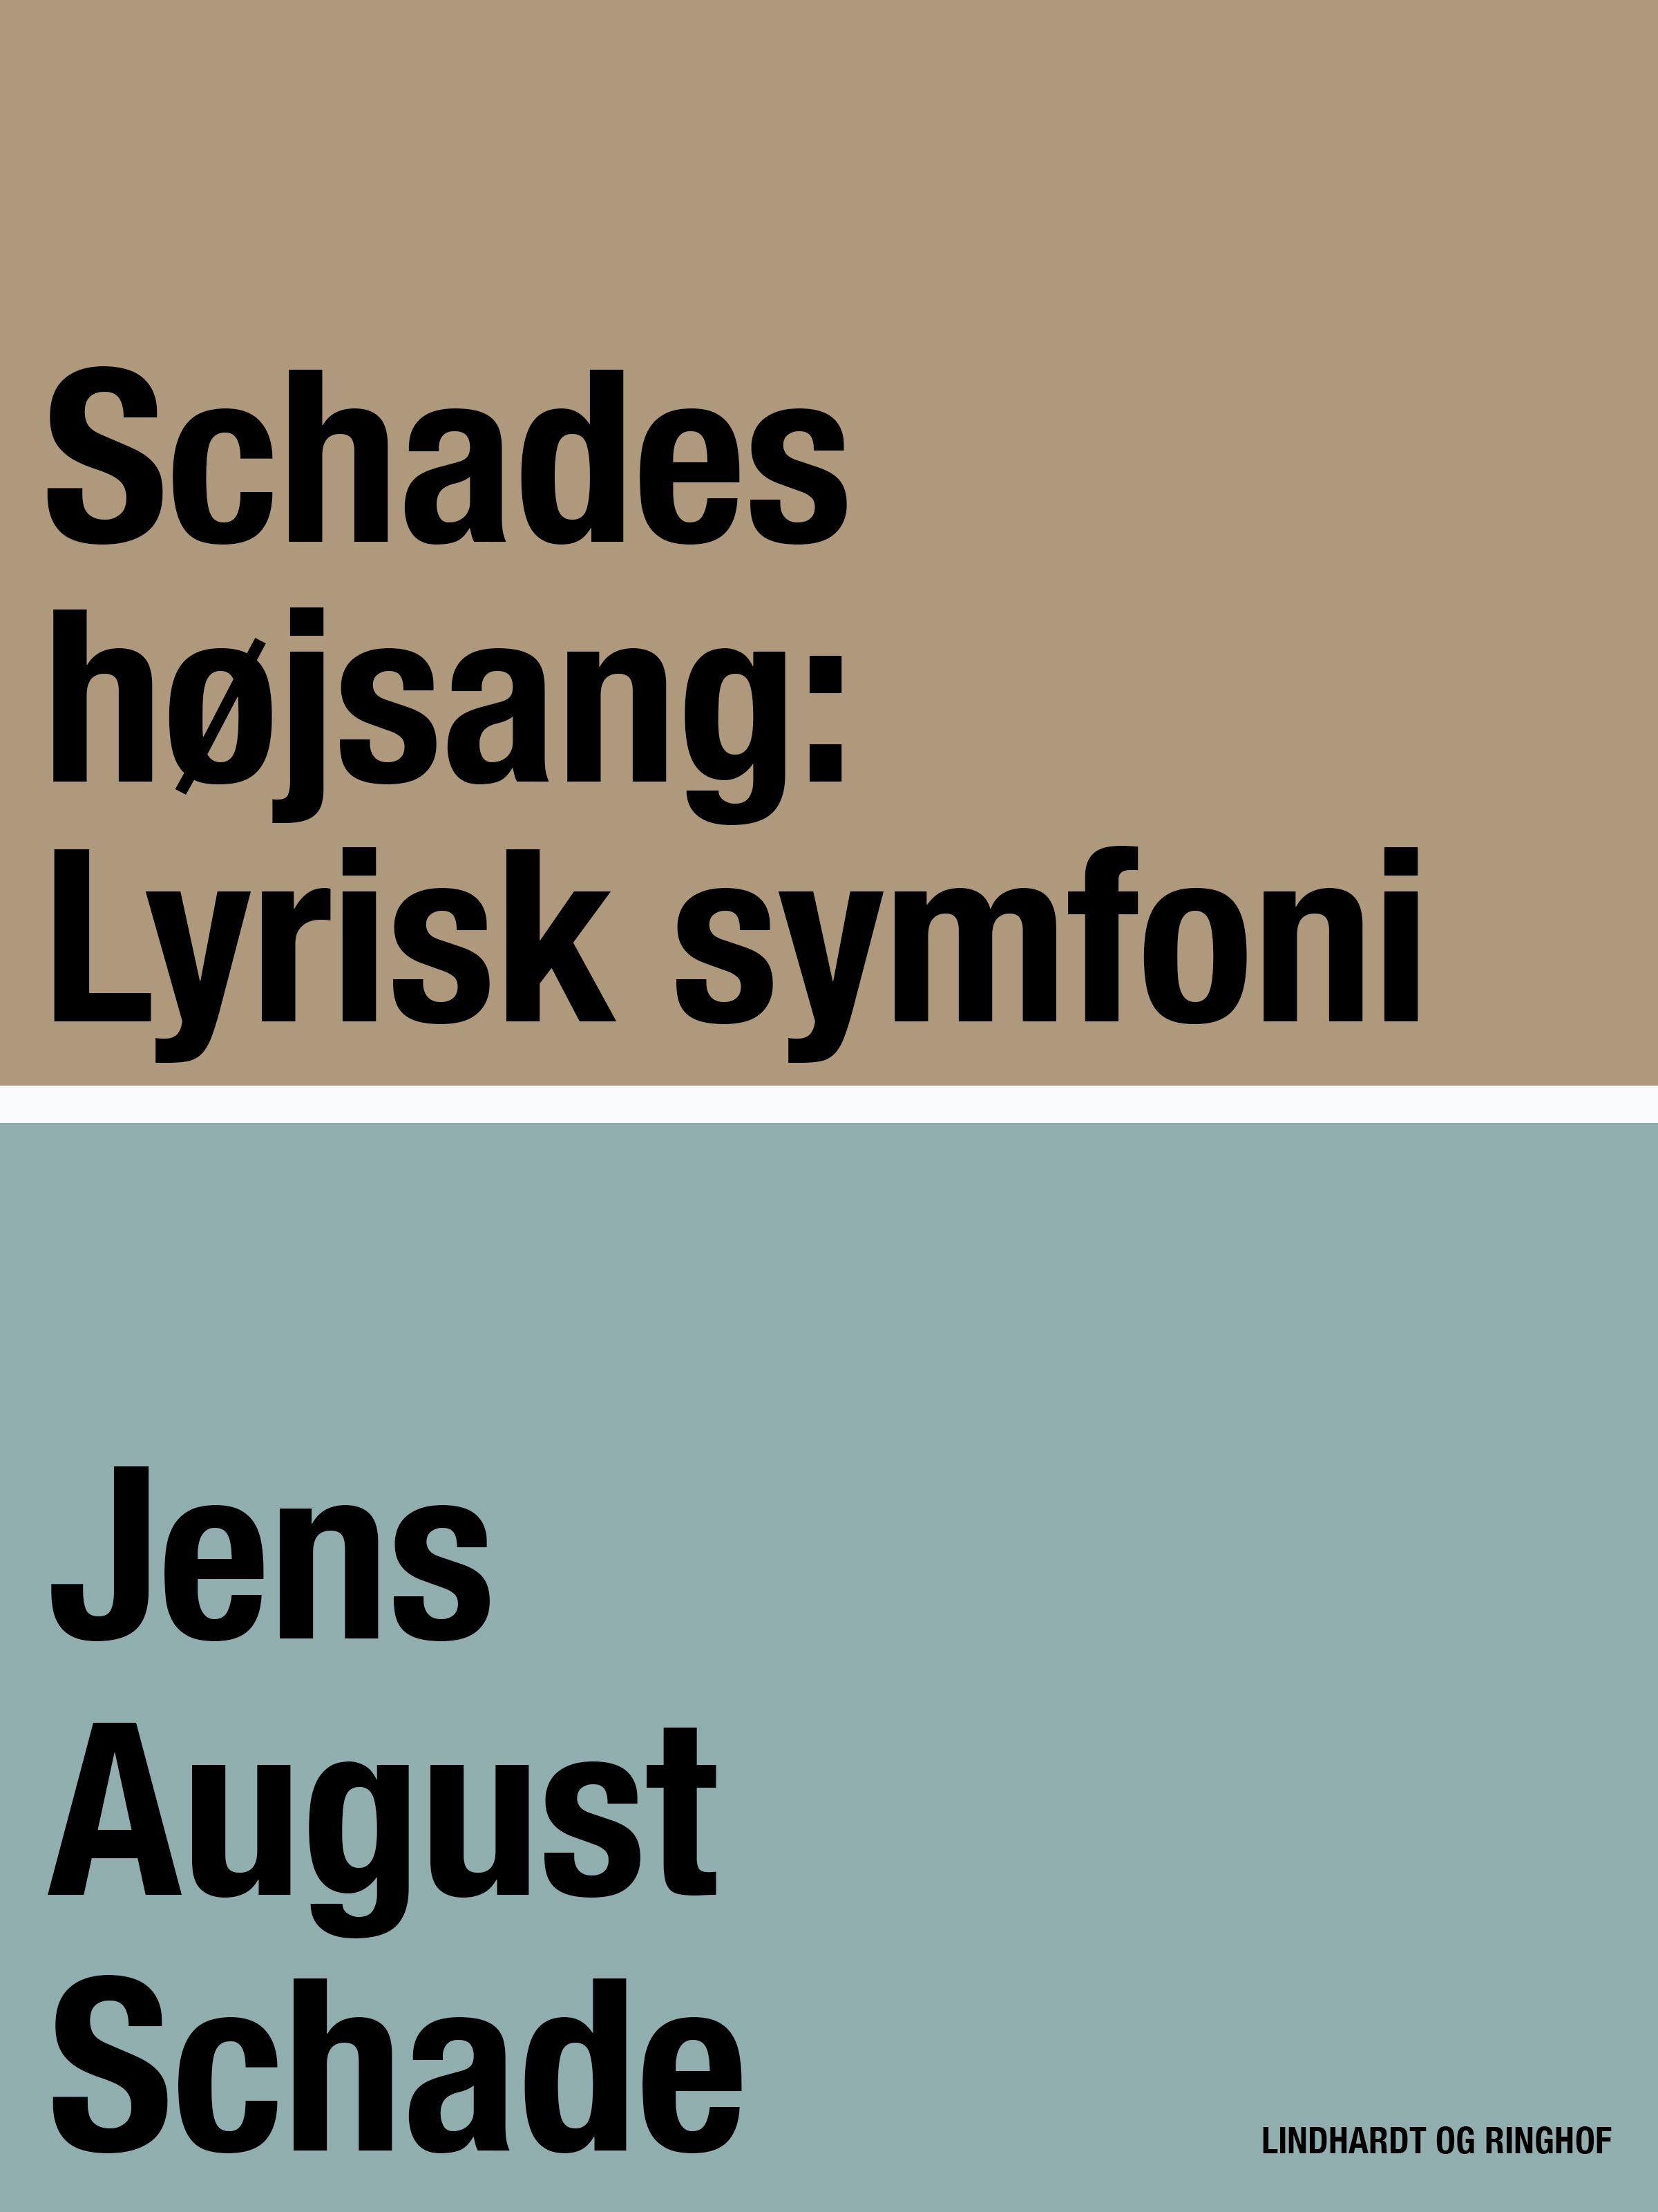 Schades højsang: Lyrisk symfoni, eBook by Jens August Schade